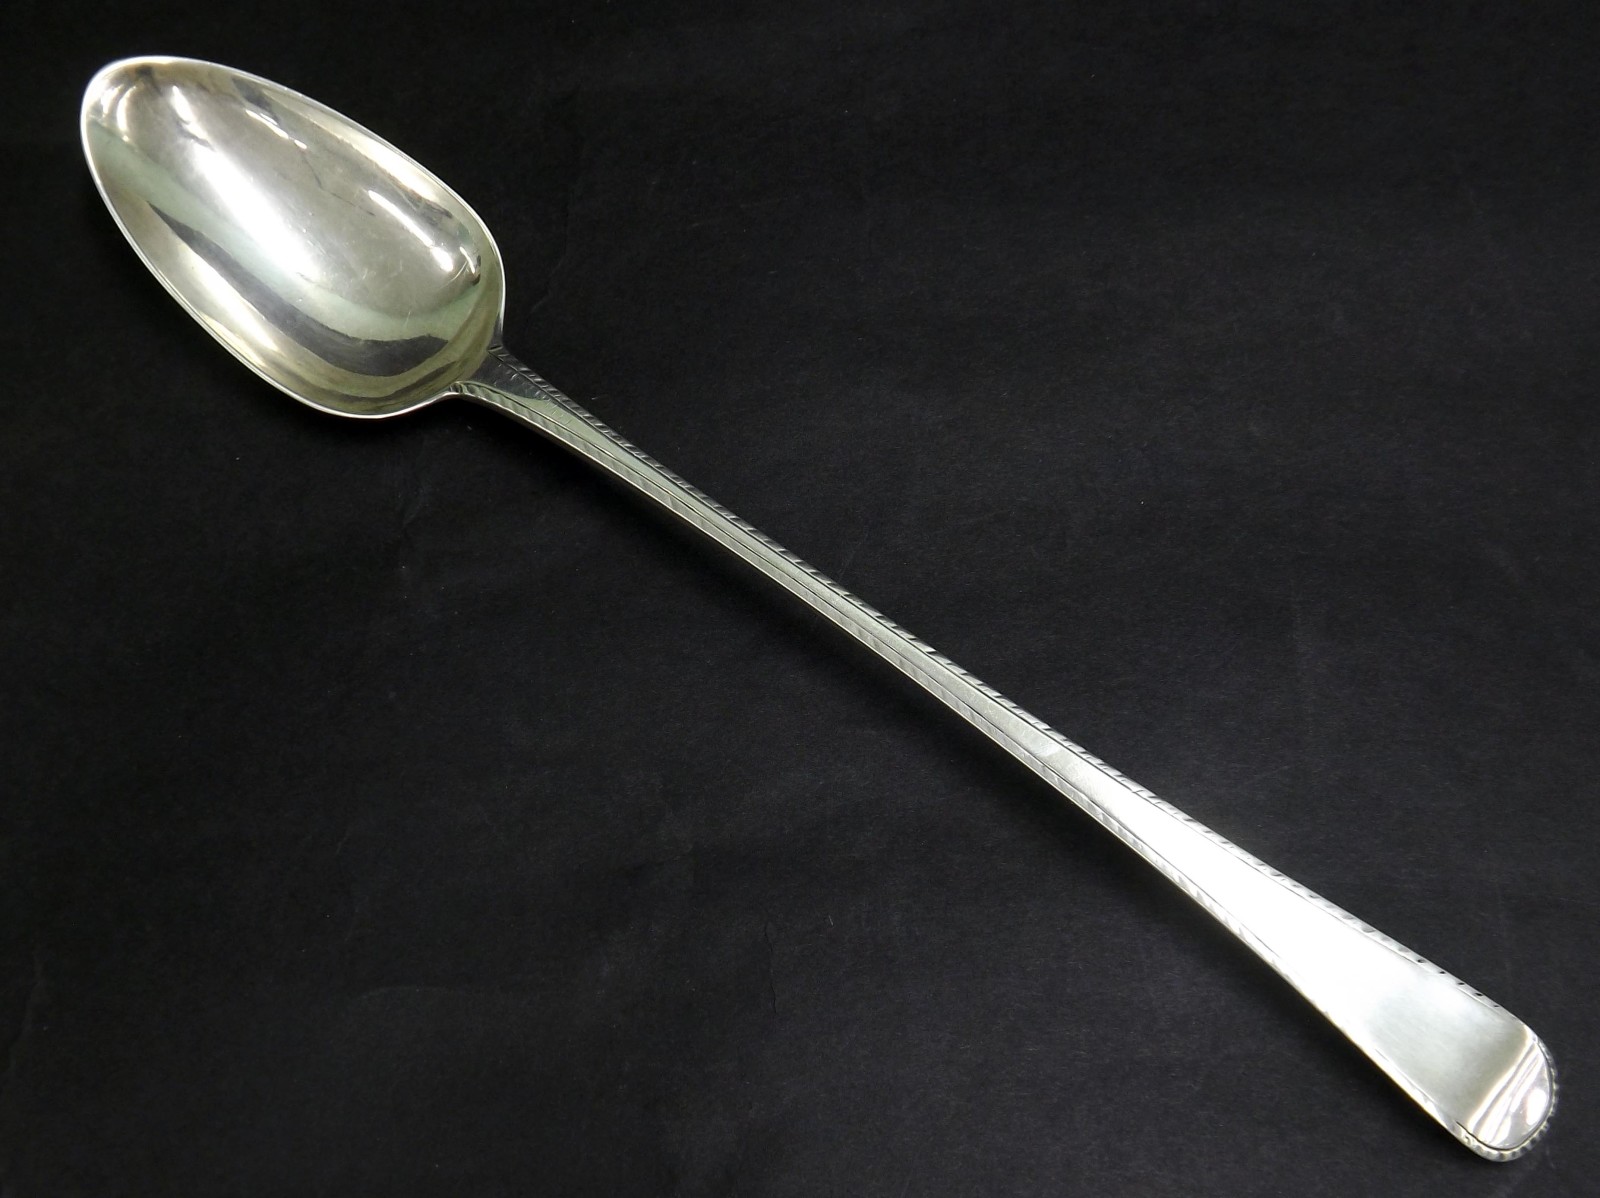 Georgian silver basting spoon, maker John Lampfert, date mark indistinct, 11.5" long, 3oz approx